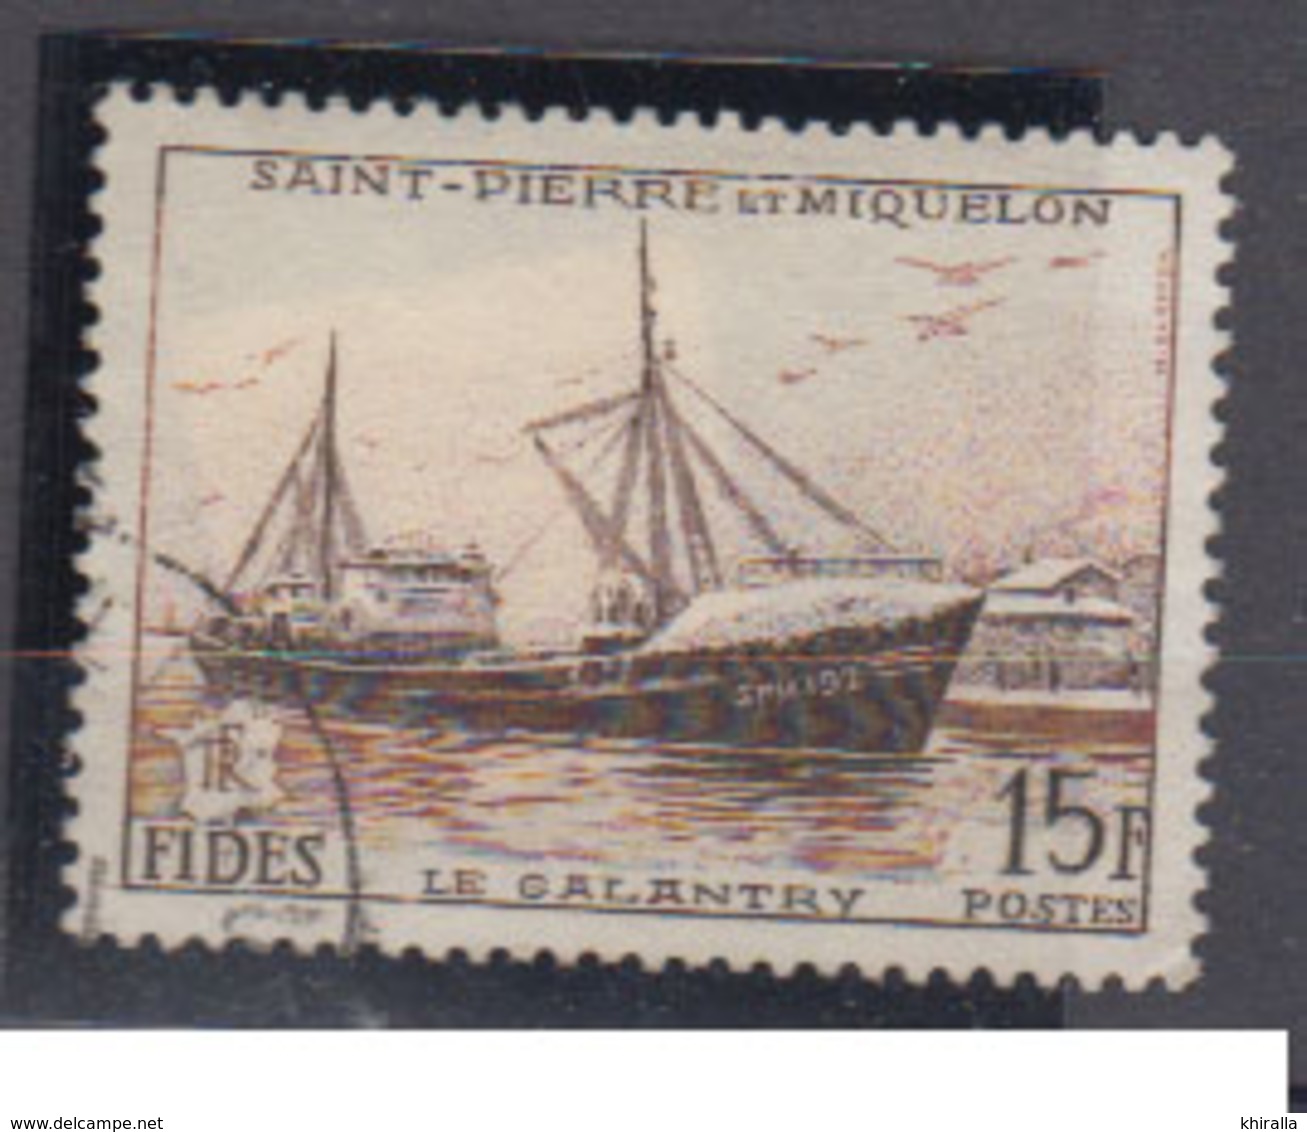 St. Pierre Et Miquelo      1956               N ° 362           COTE       4 € 00           ( E 205 ) - Used Stamps